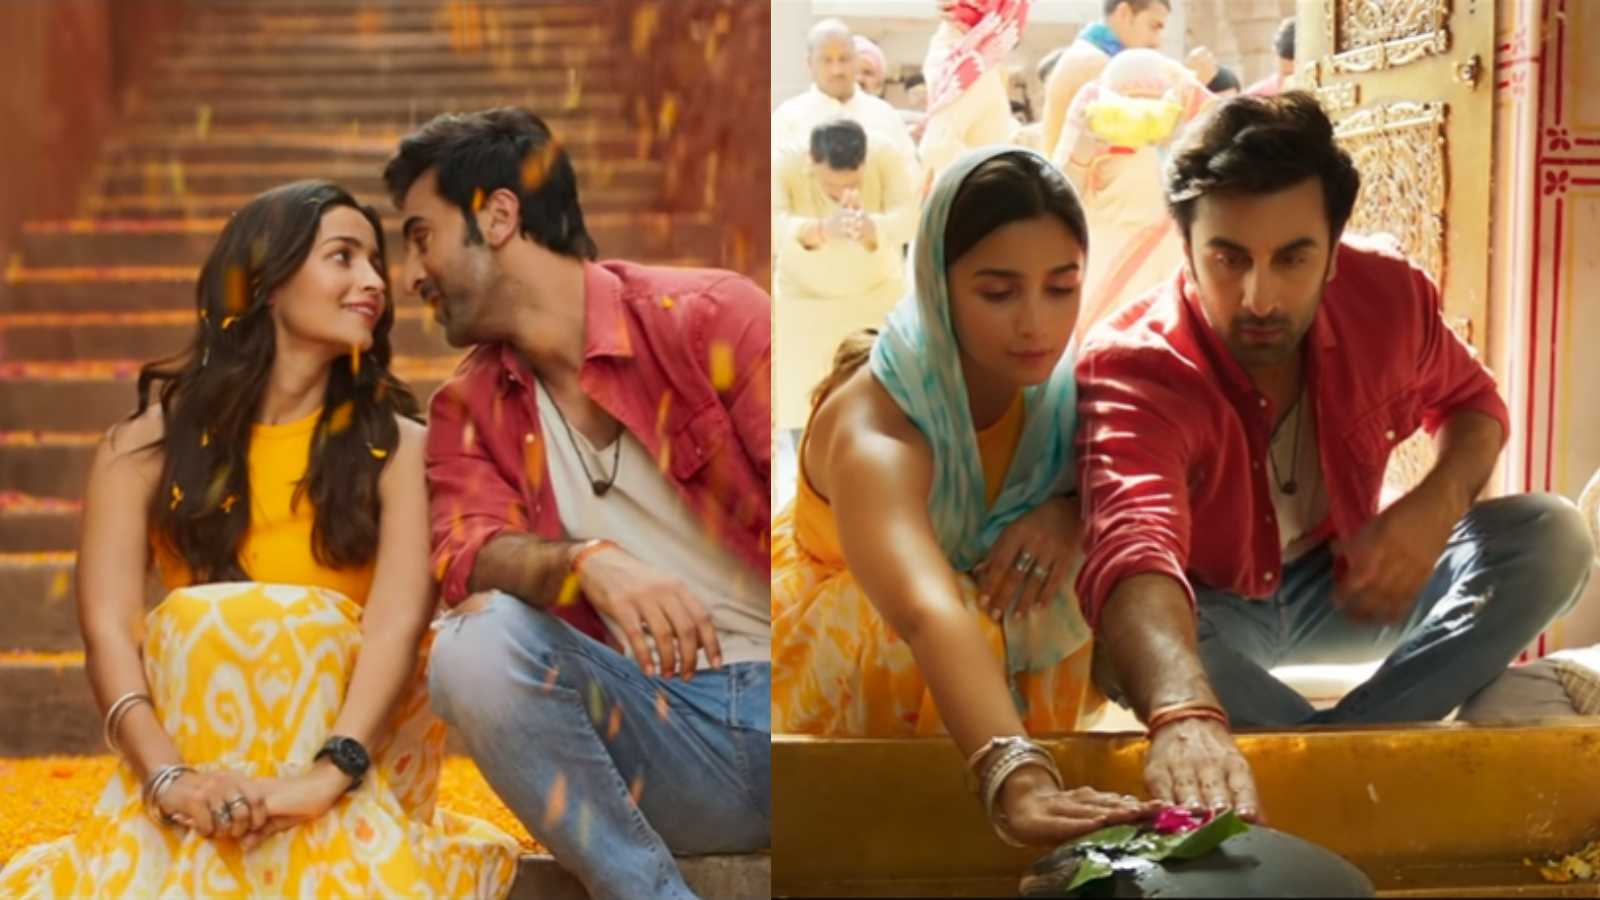 Brahmastra song Kesariya gives first teaser of Ranbir Kapoor and Alia Bhatt's onscreen chemistry ahead of their wedding